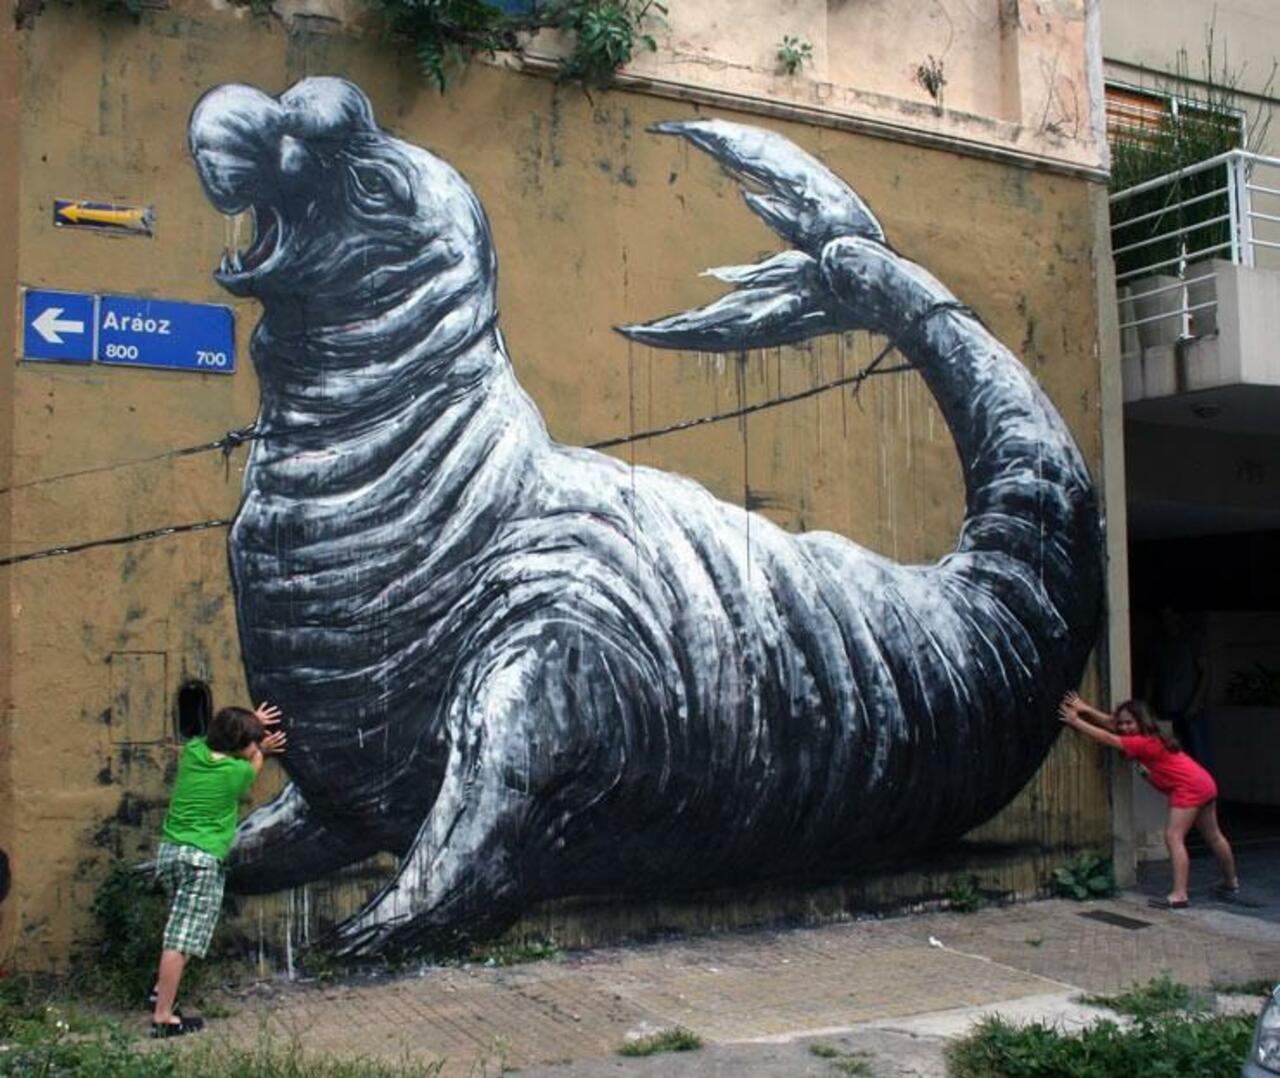 “@Pitchuskita: ROA with EVER 
Buenos Aires, Argentina

#streetart #art #urbanart #graffiti #mural http://t.co/MOHBEQav0L”